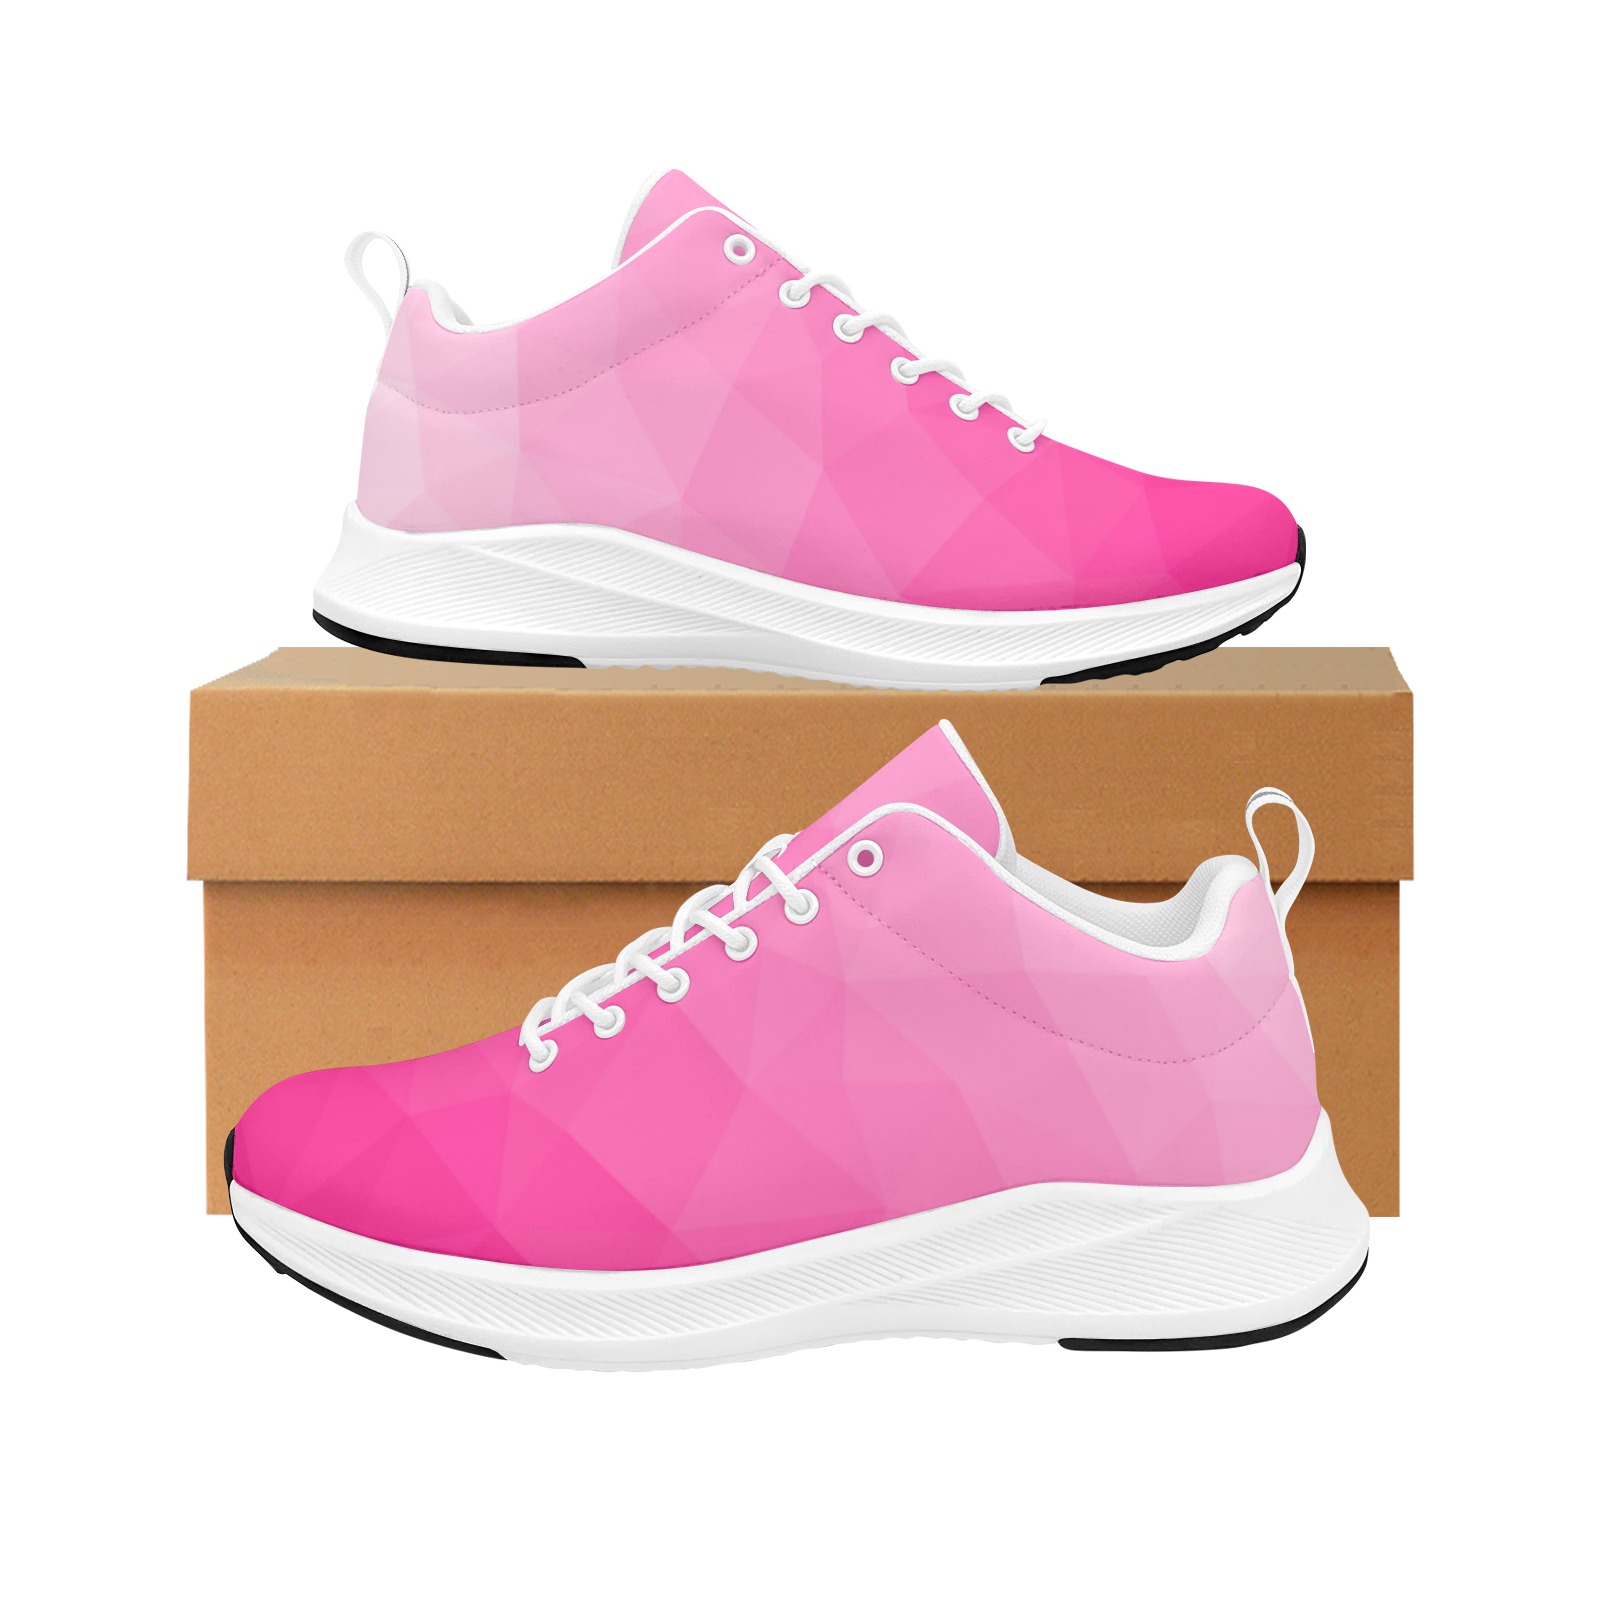 Hot pink gradient geometric mesh pattern Women's Alpha Running Shoes (Model 10093)